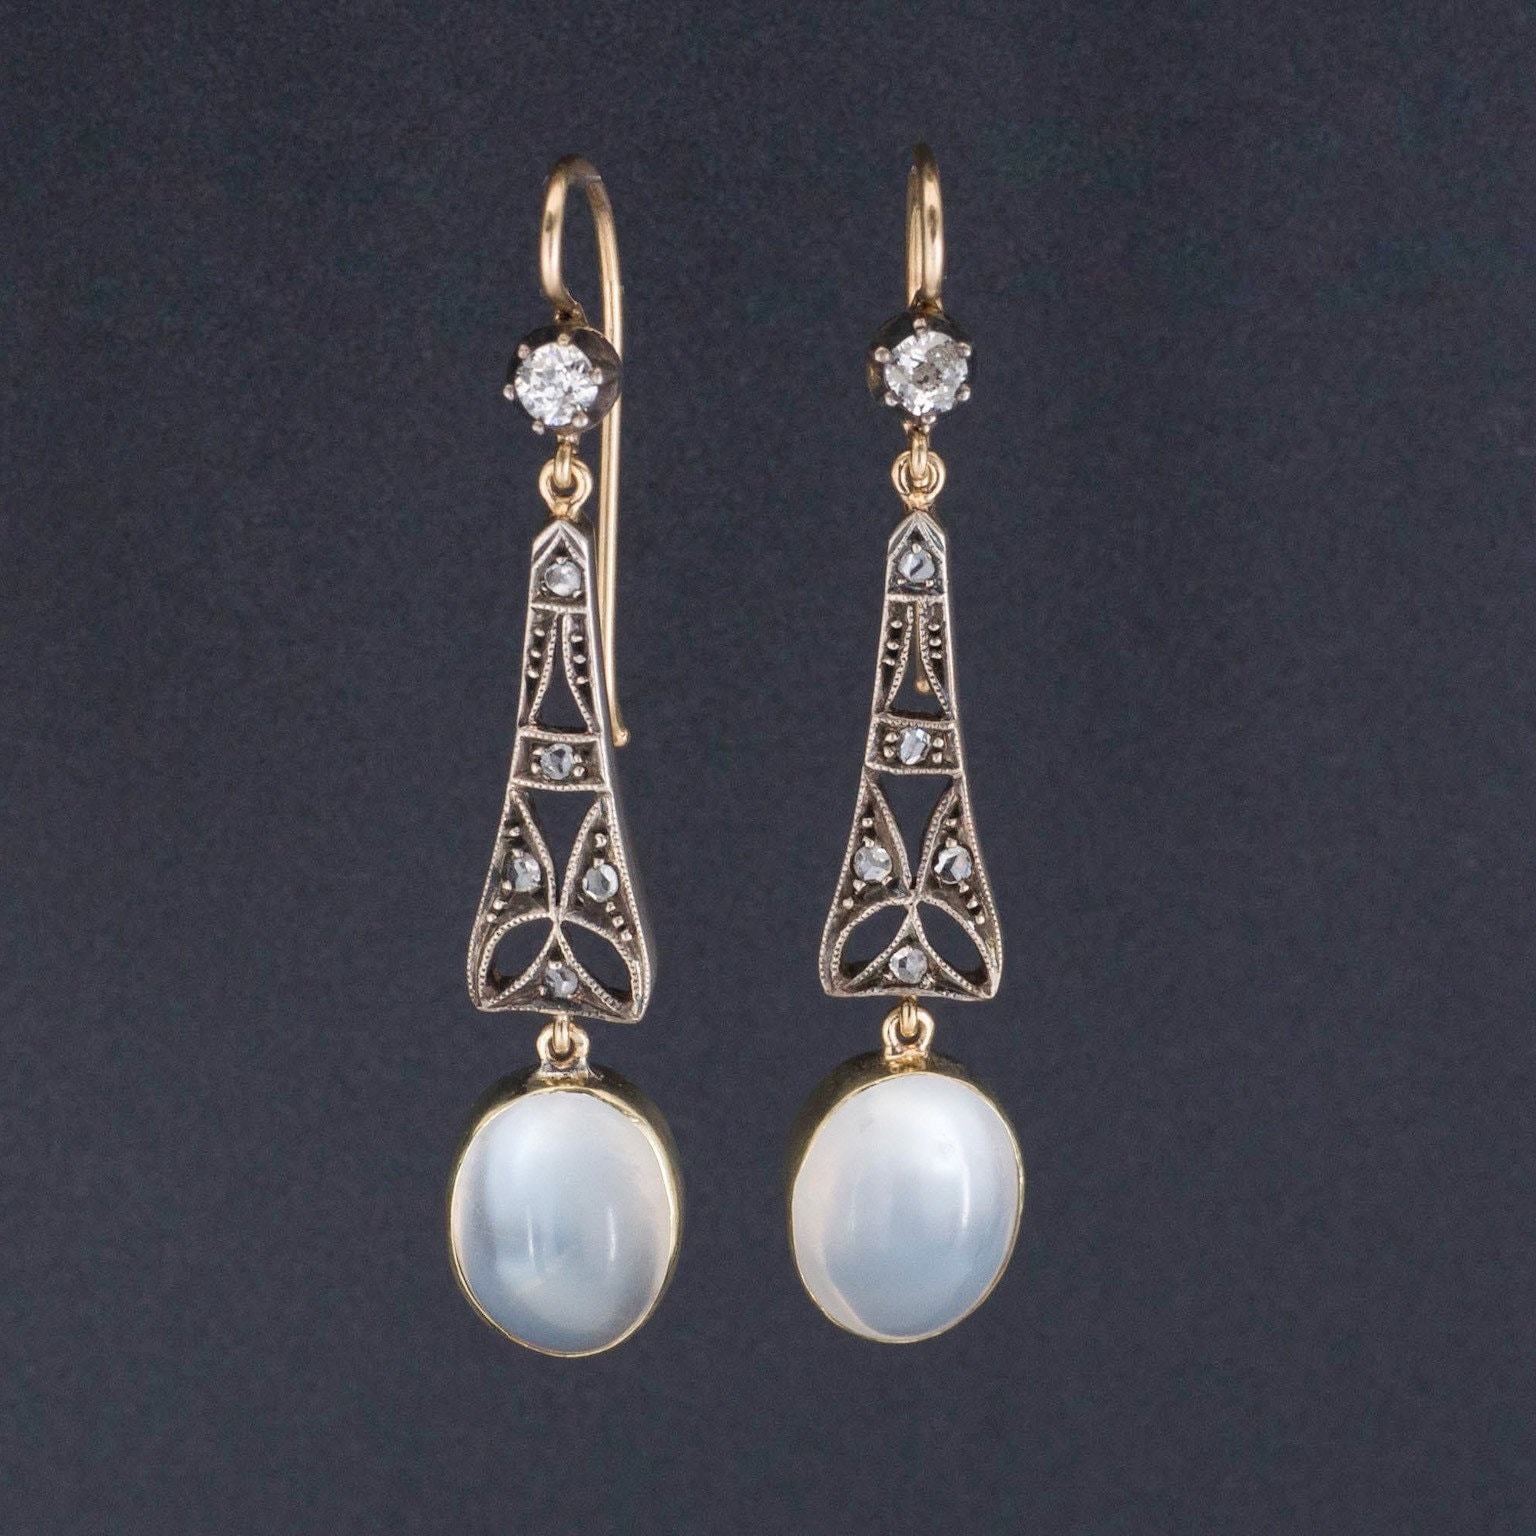 Moonstone & Diamond Earrings | 14k Gold Silver and Moonstone Earrings 